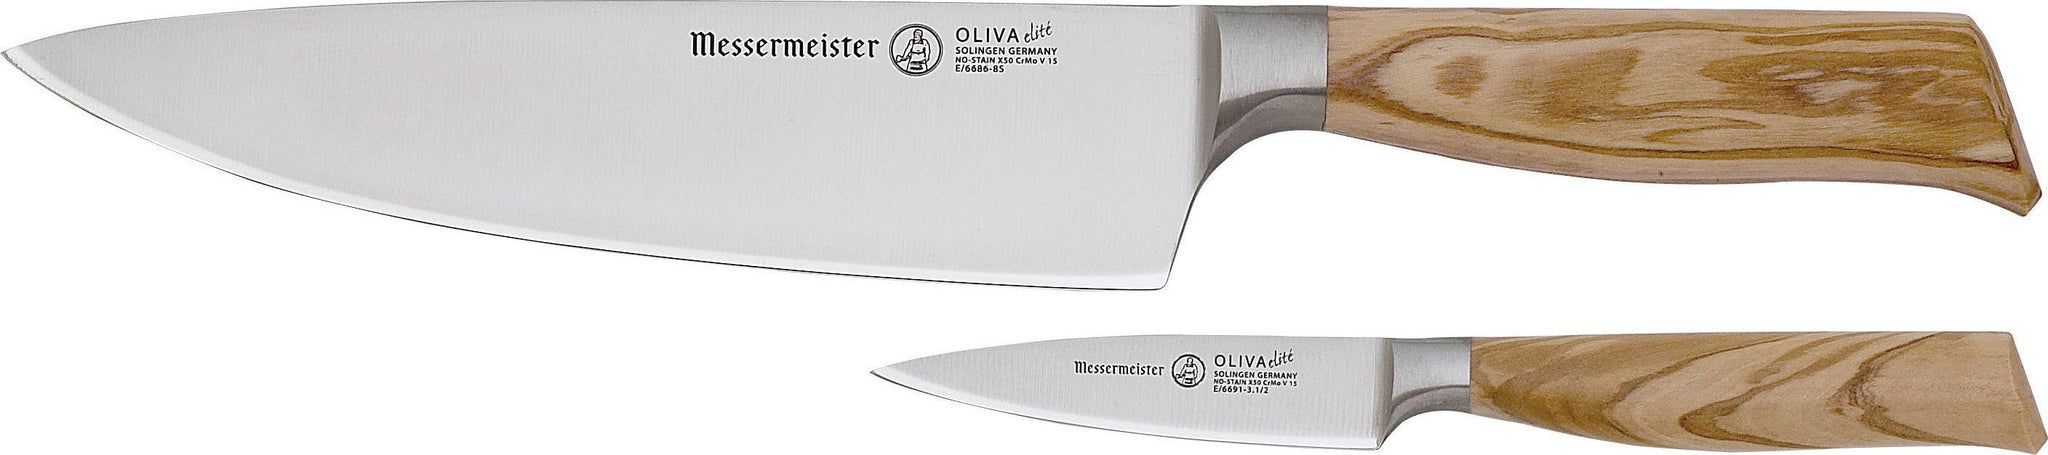 Messermeister - Oliva Elite 2 PC Chef's Knife & Parer Set - E/6000-2CP